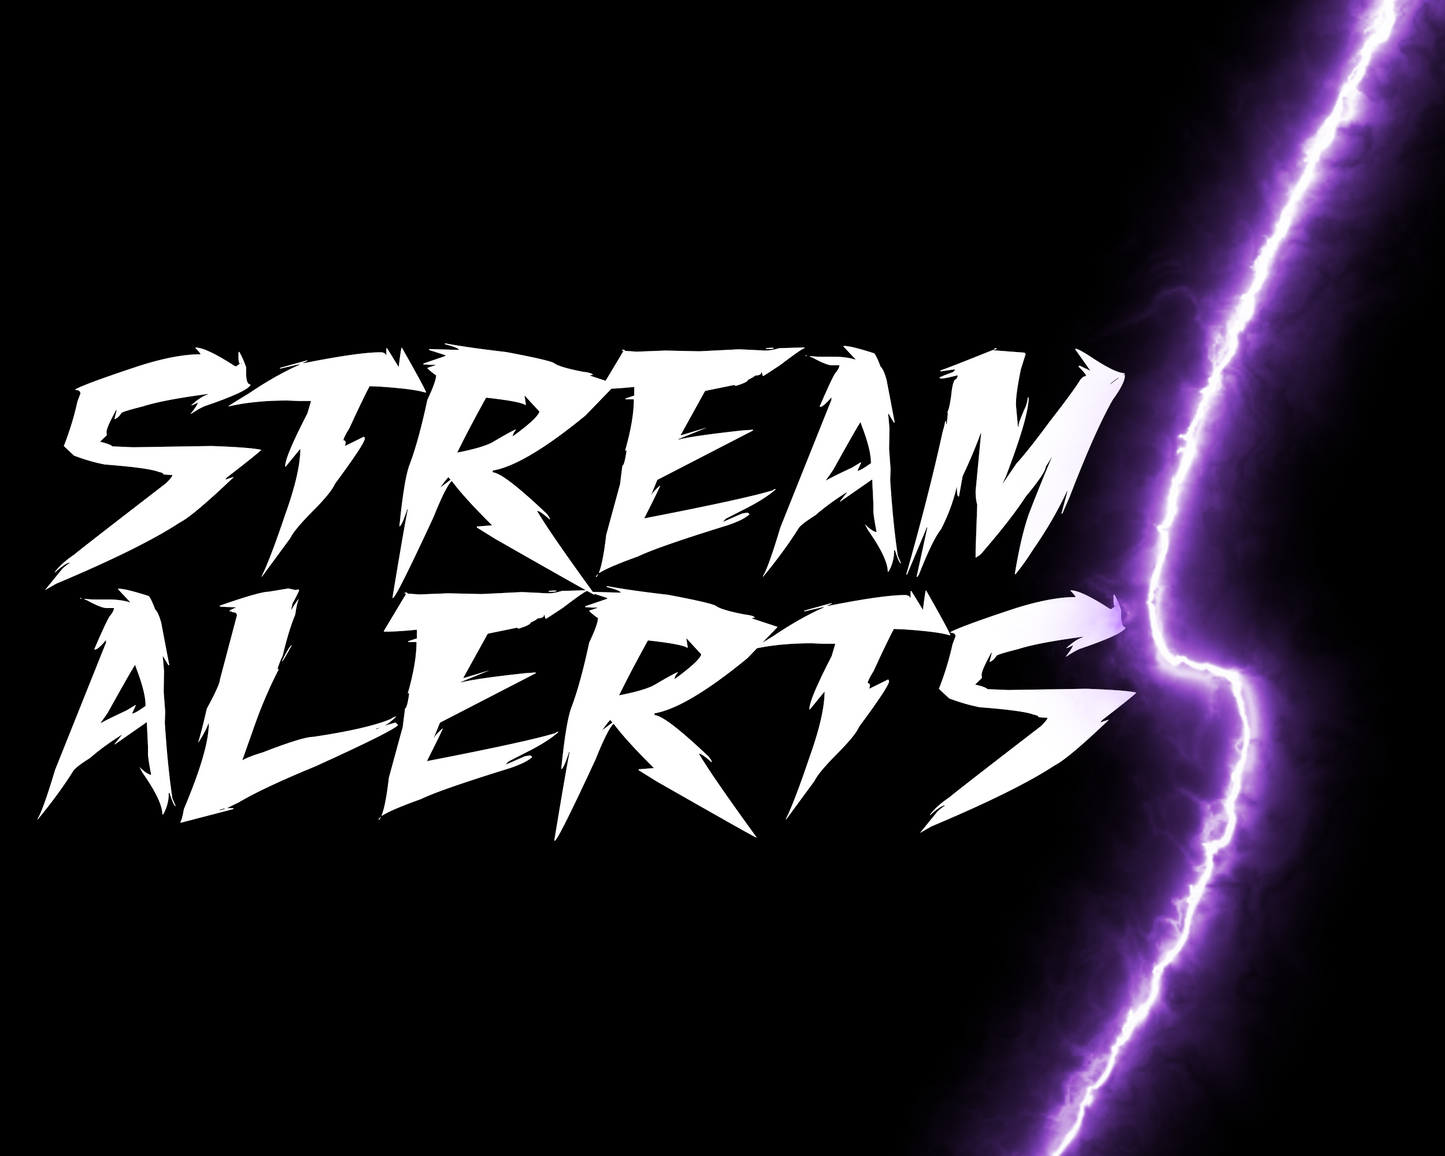 Lightning Twitch Stream Alerts